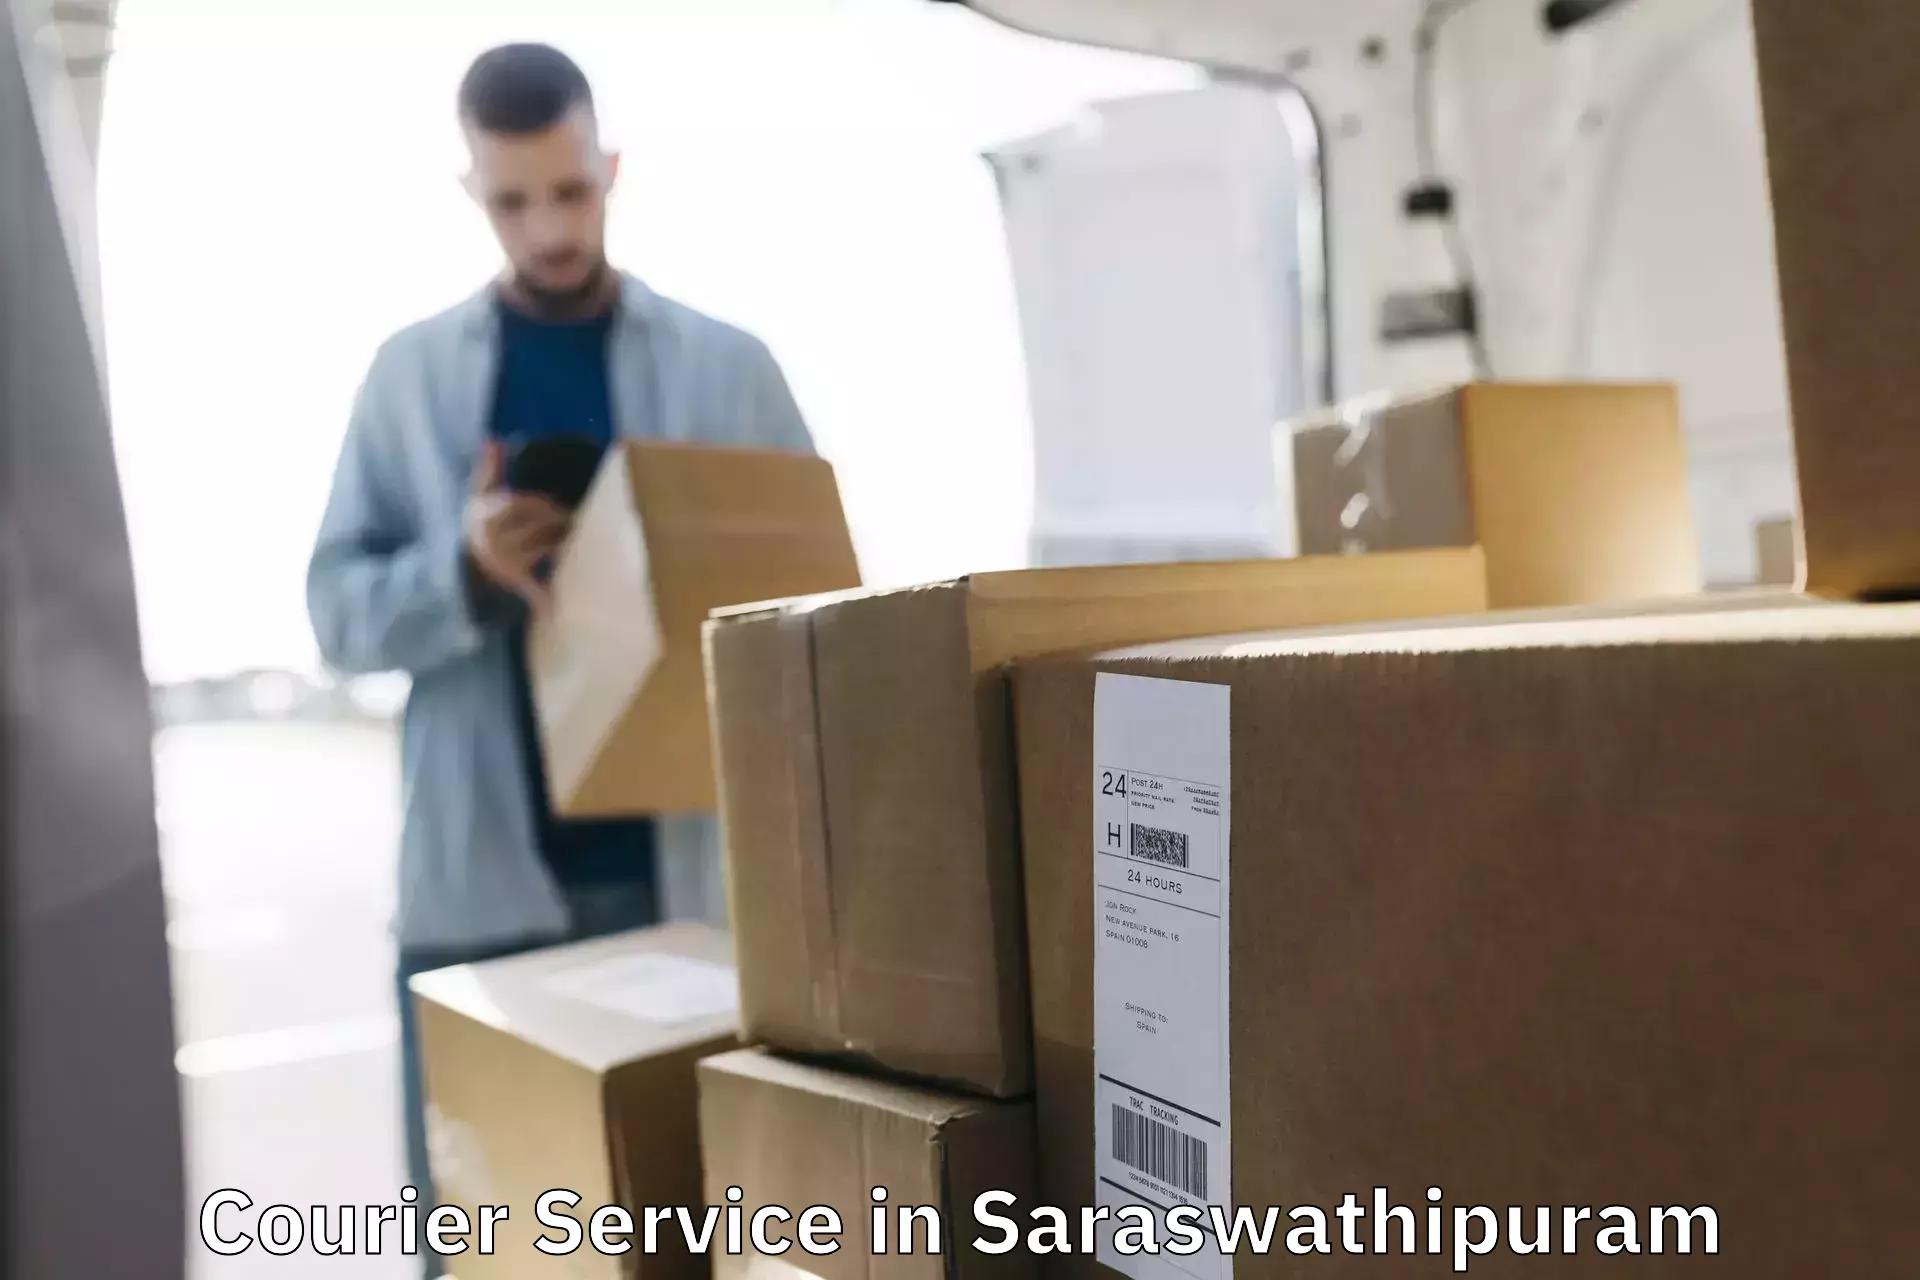 Comprehensive delivery network in Saraswathipuram